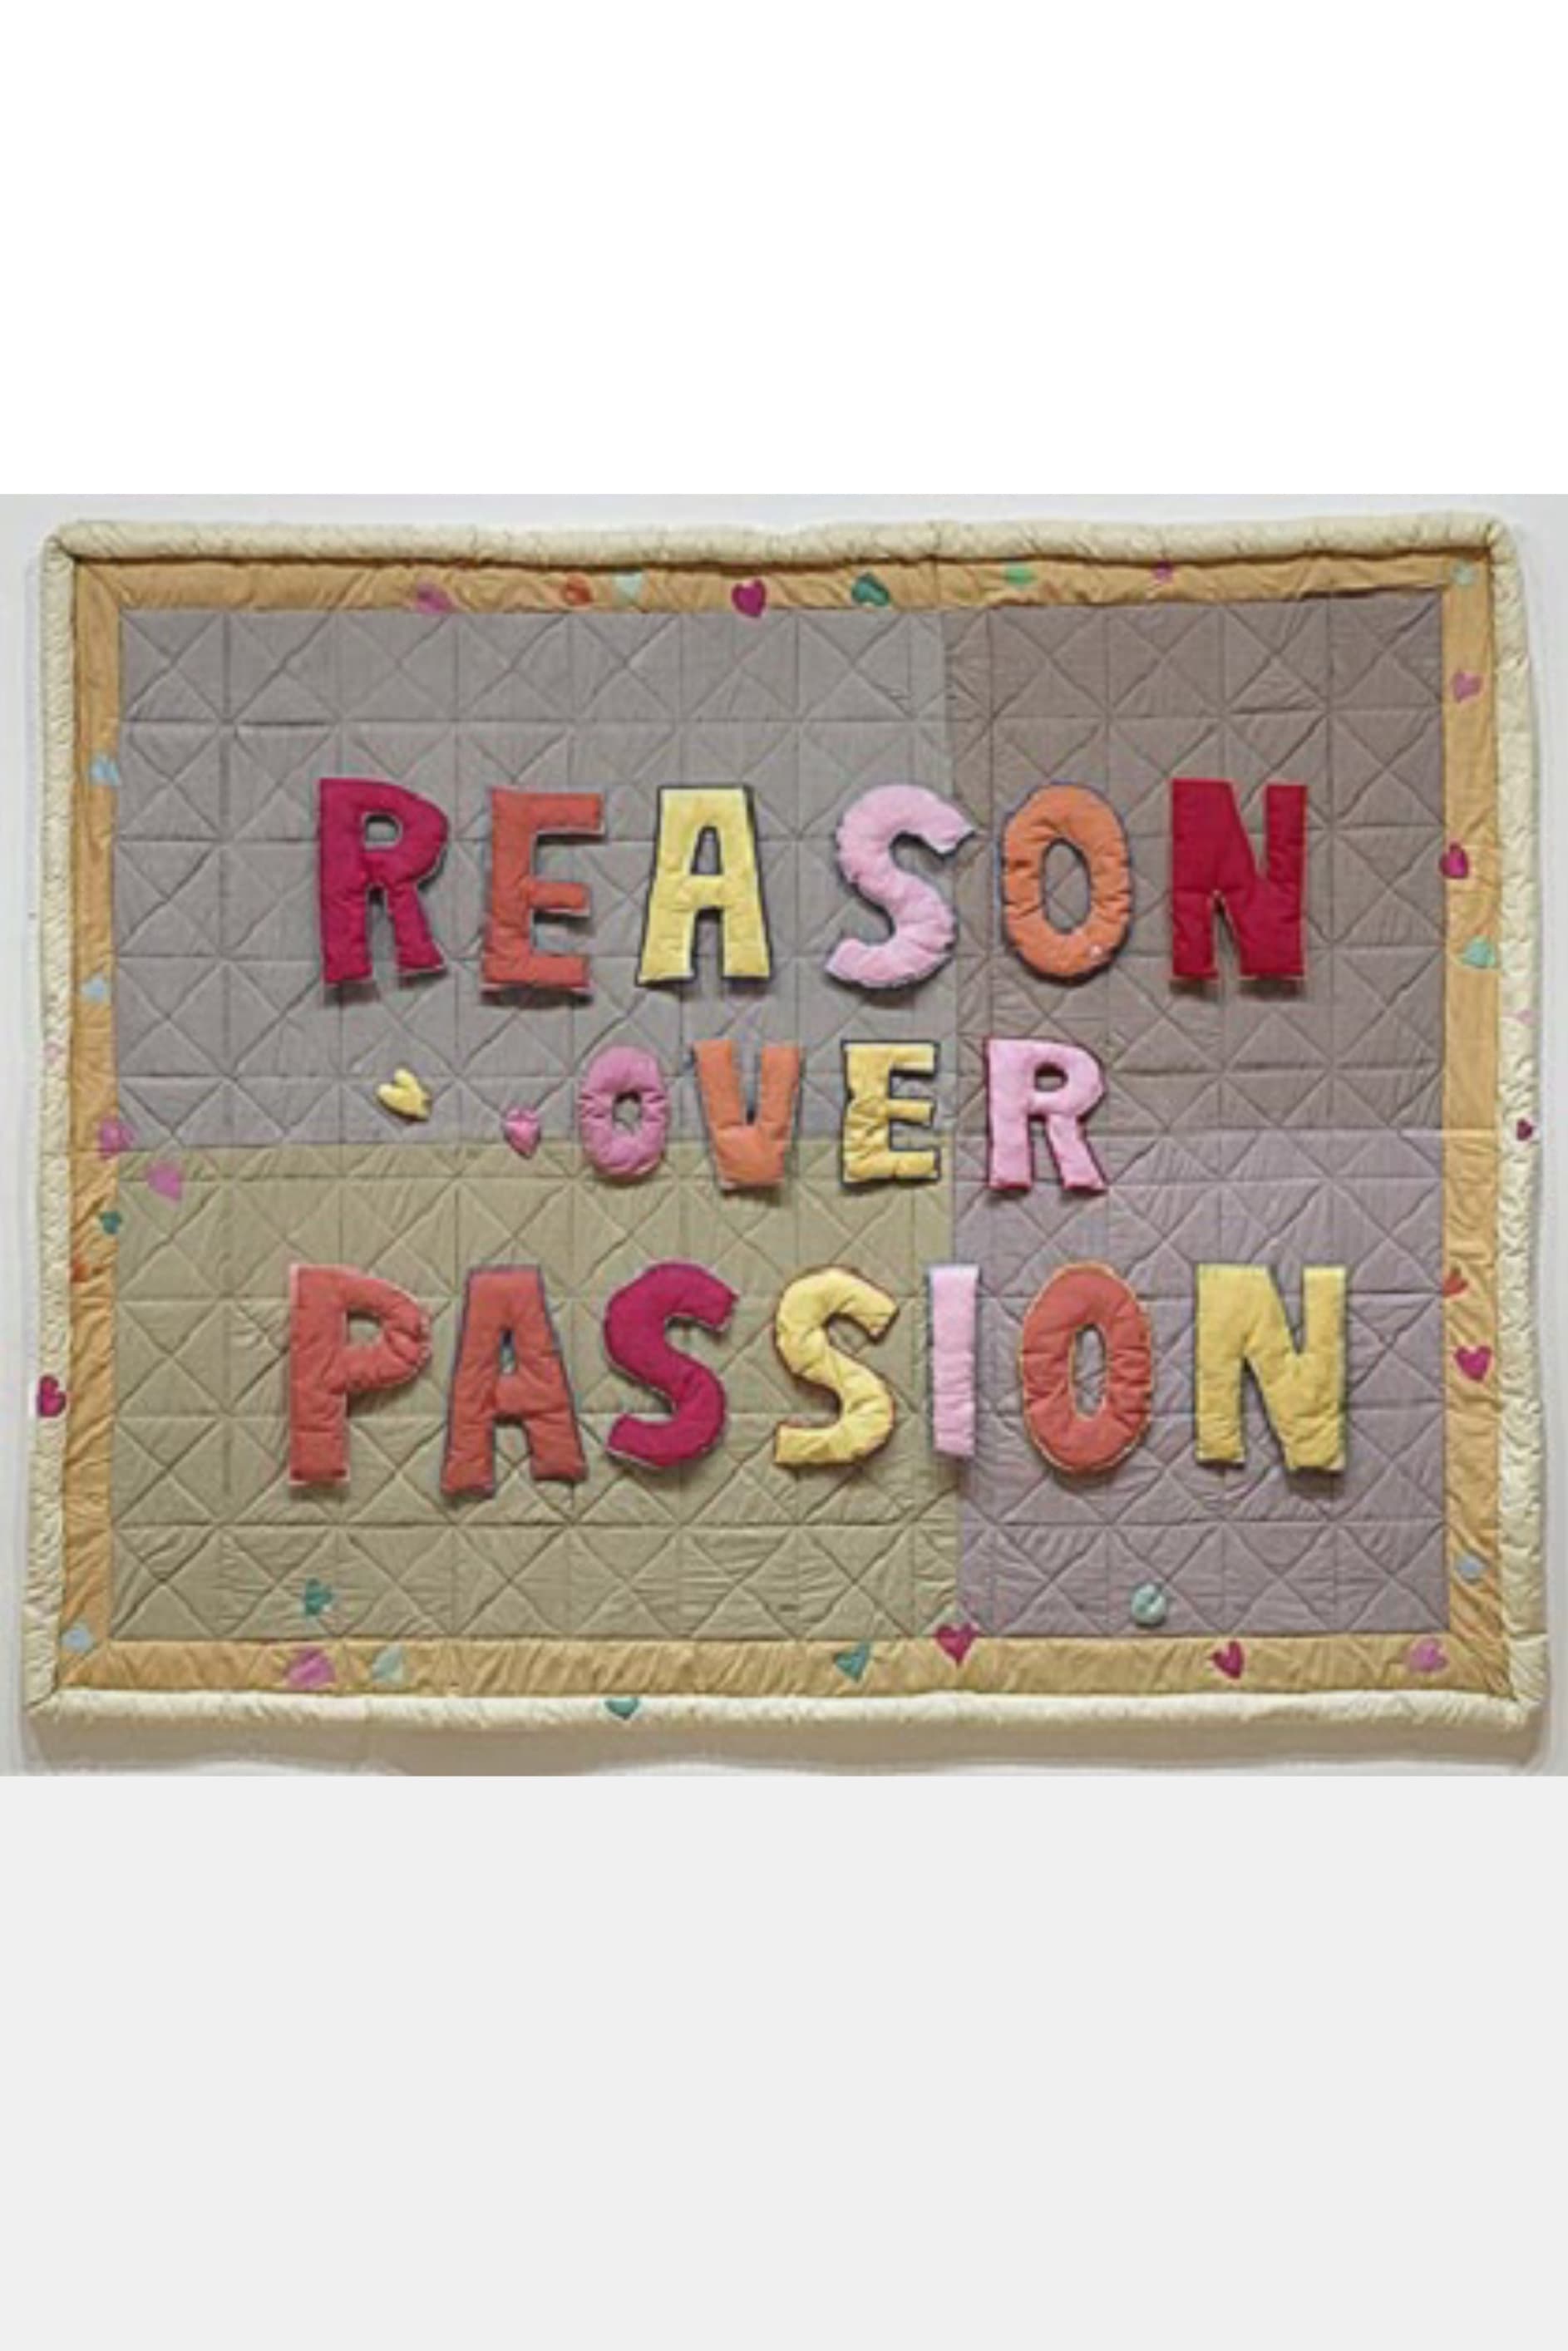 Reason Over Passion